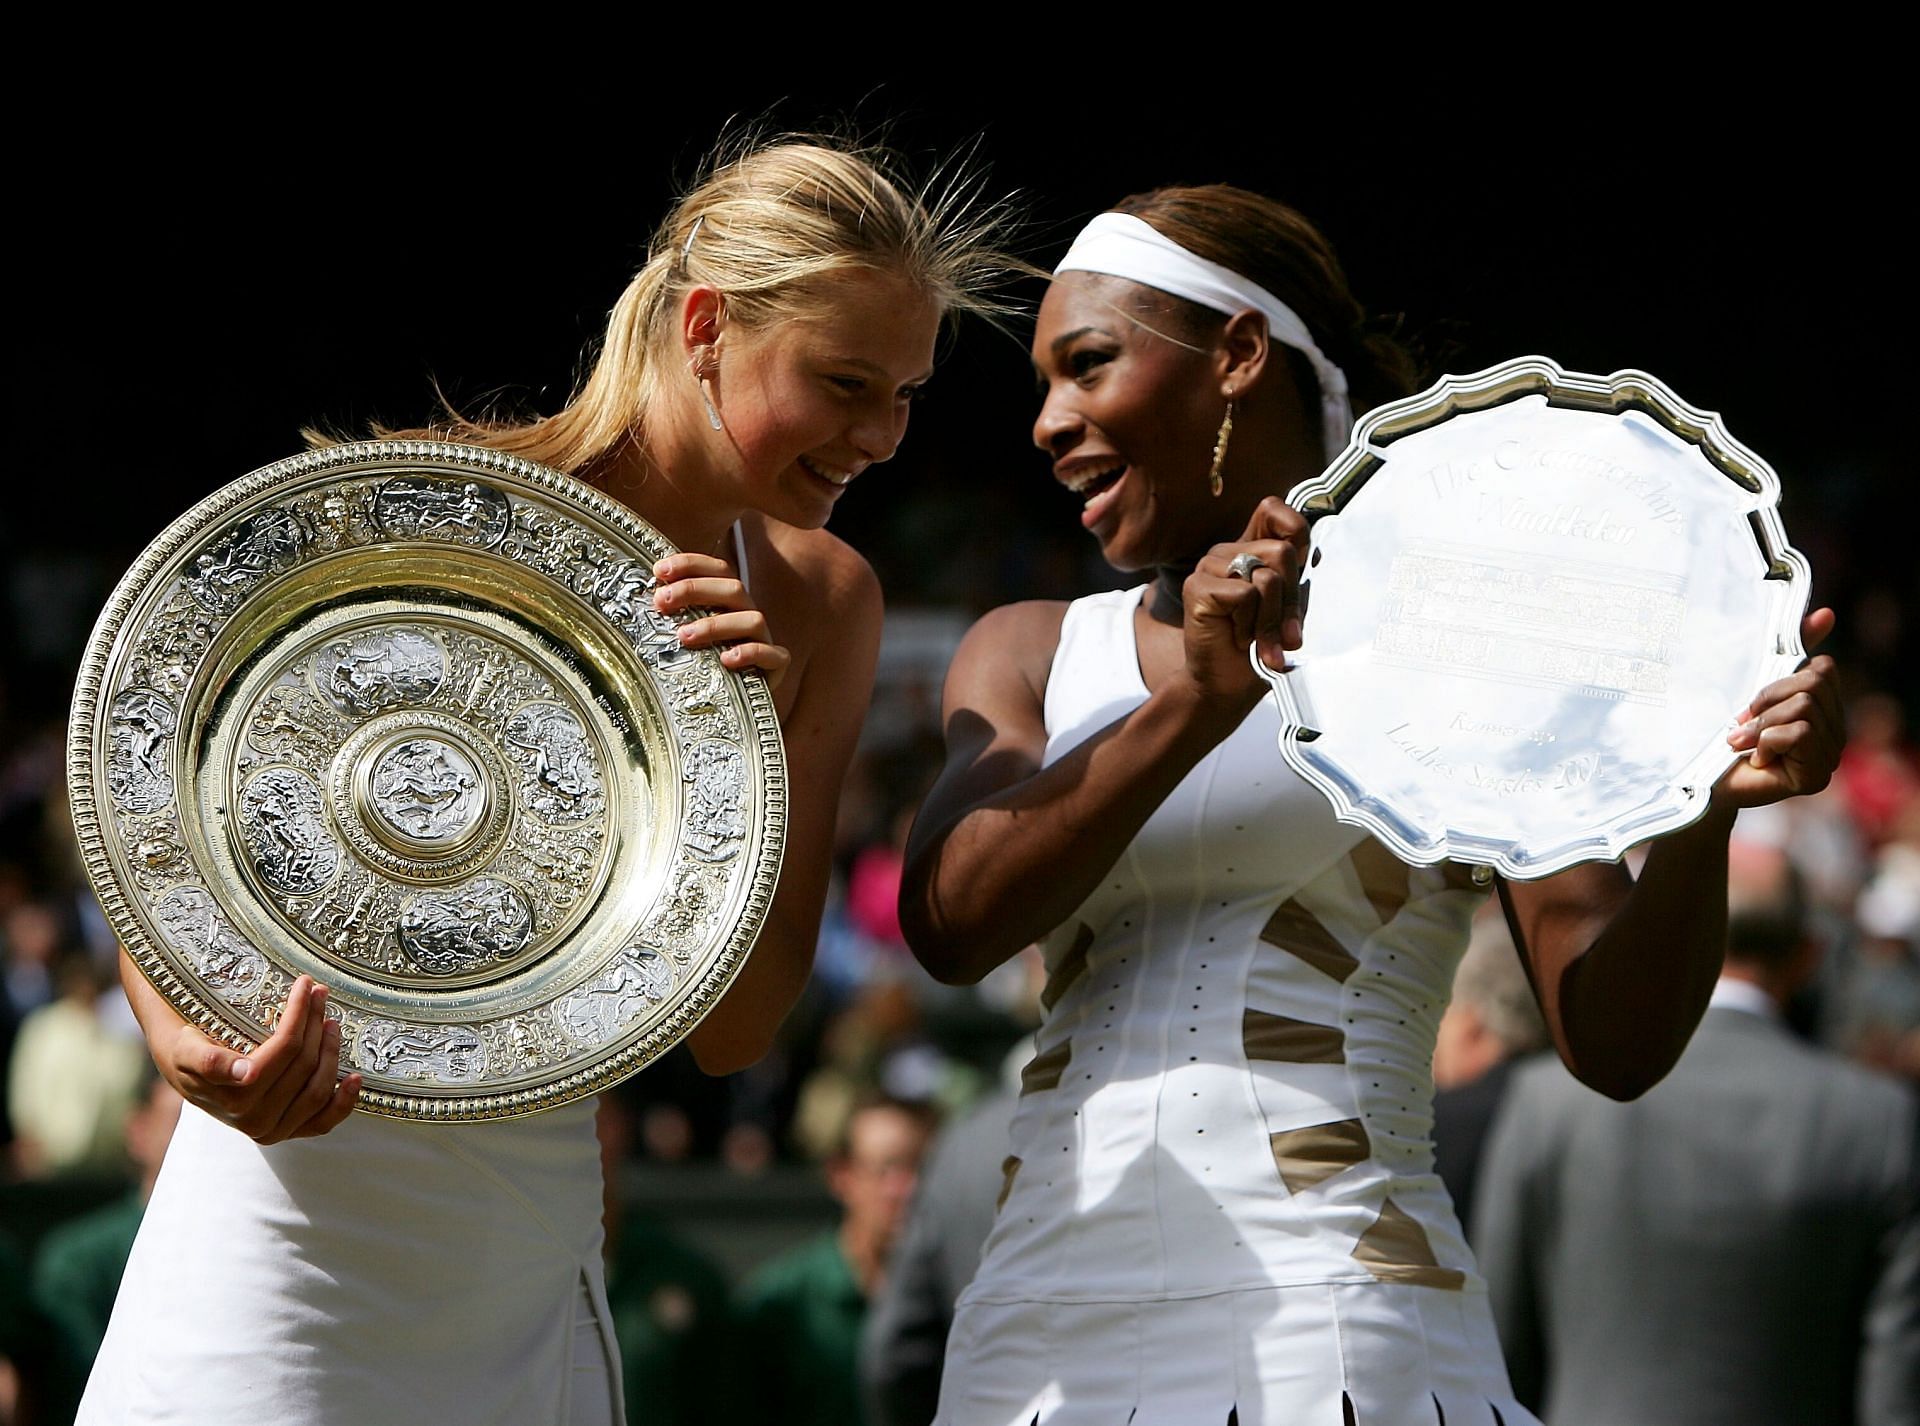 Maria Sharapova beat Serena Williams in the Wimbledon 2004 final.